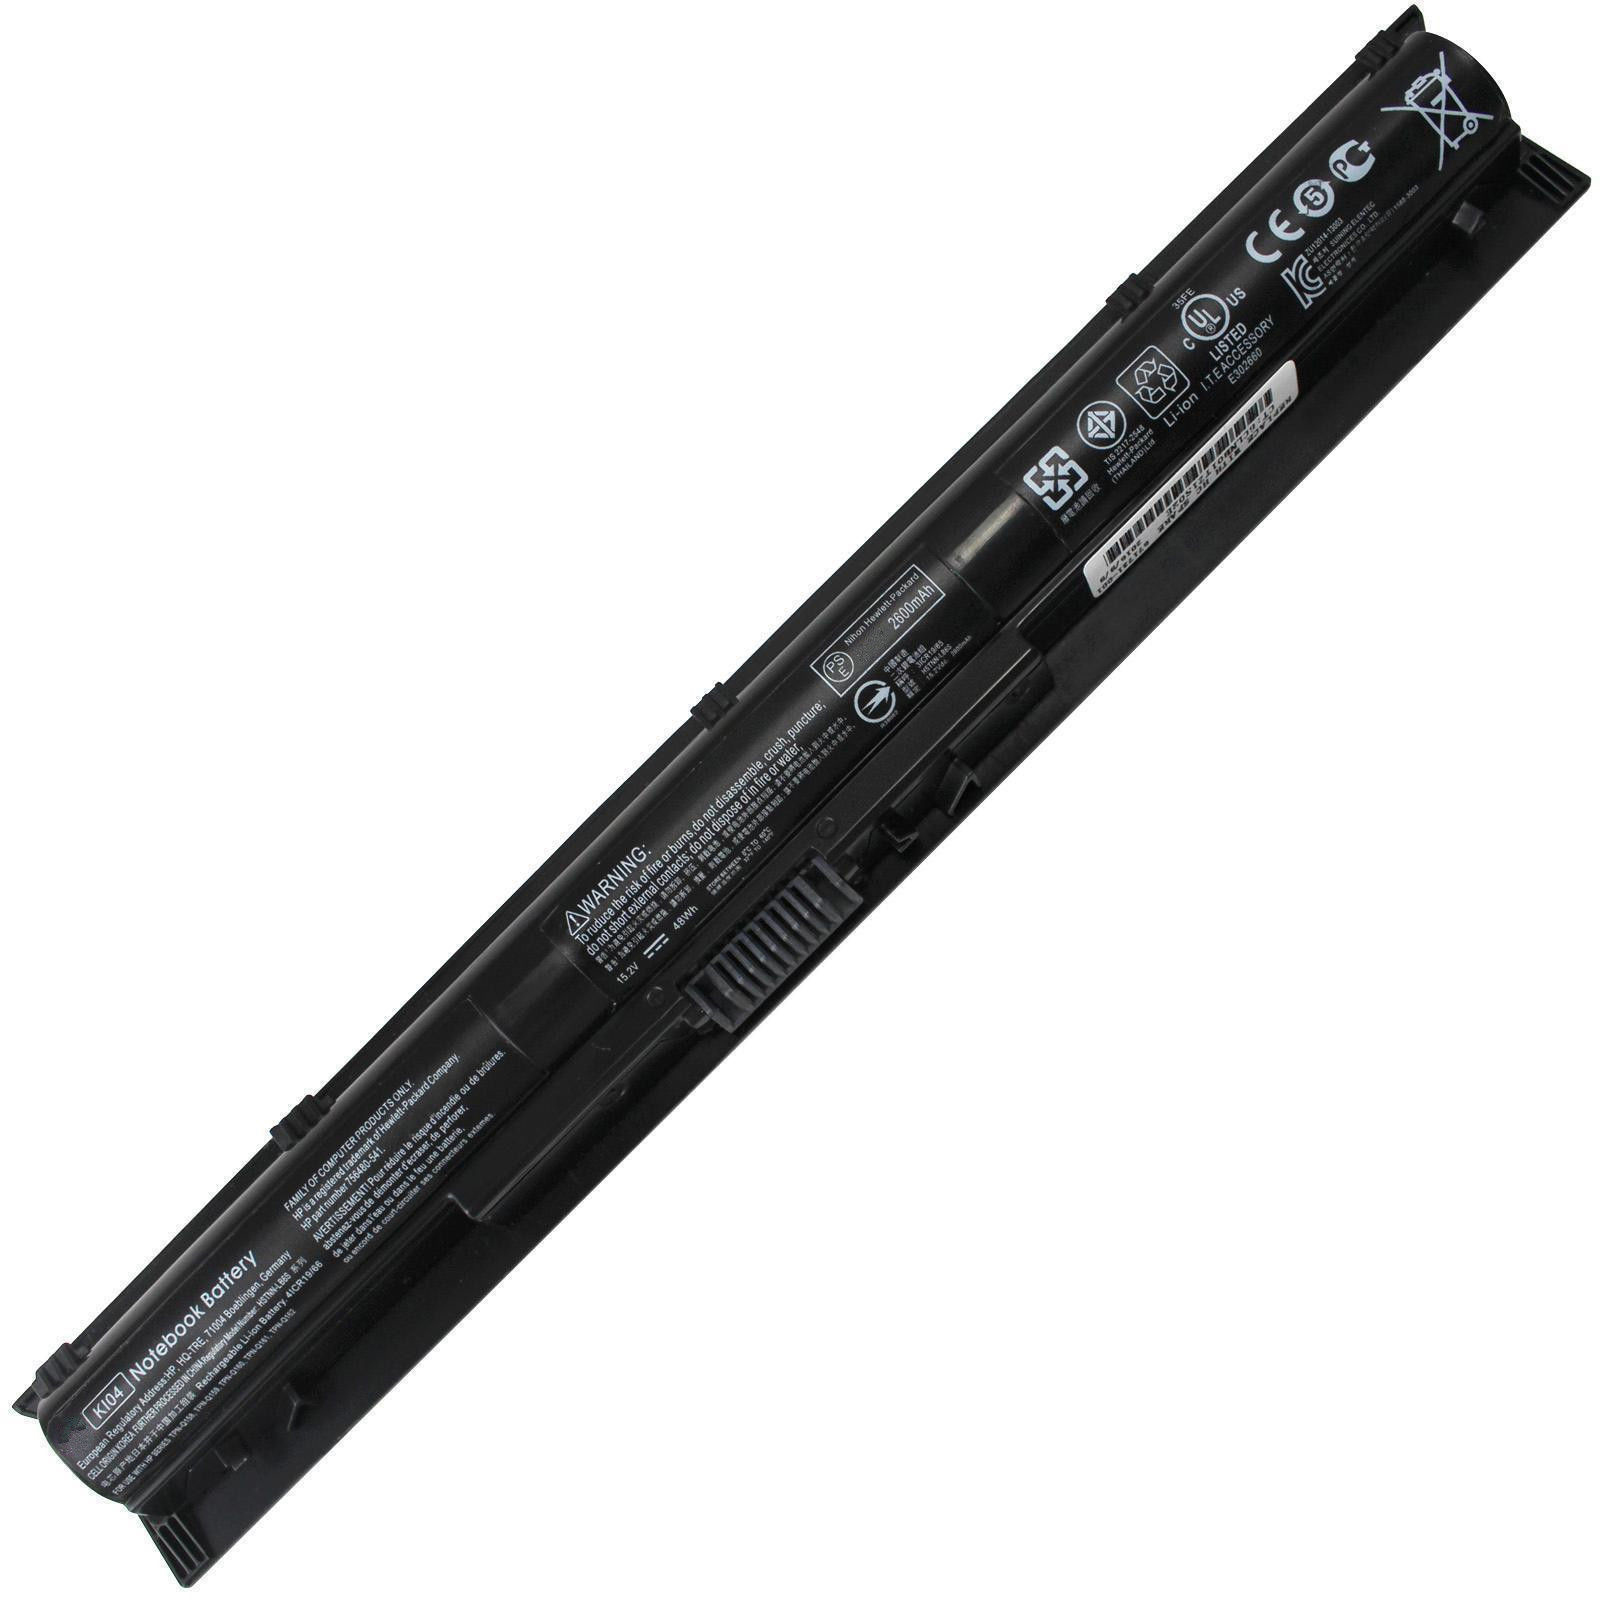 HP 800050-001 Laptop Battery